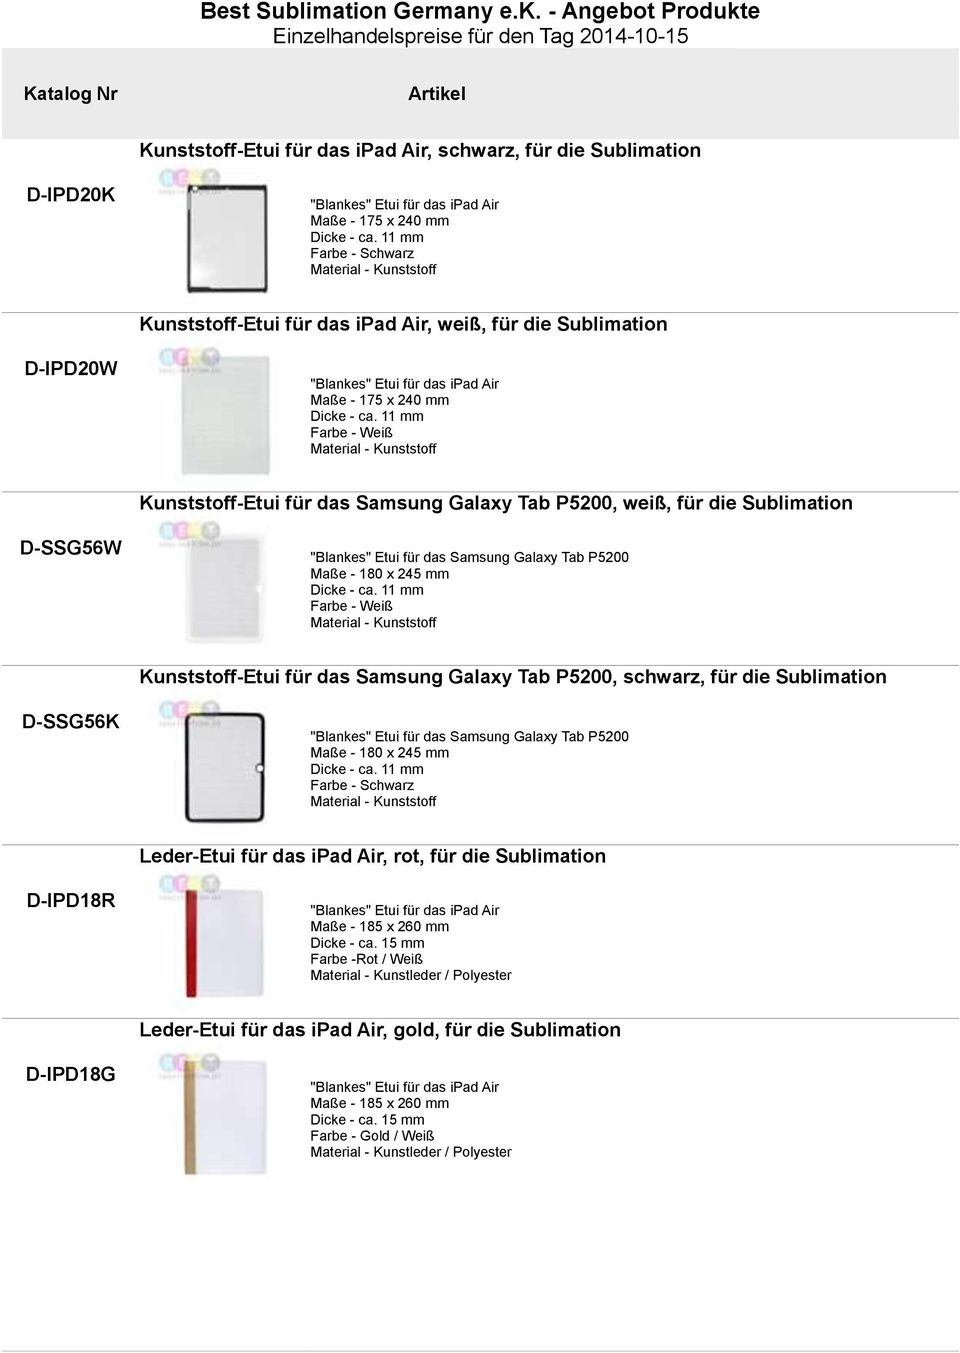 11 mm Farbe - Weiß Material - Kunststoff Kunststoff-Etui für das Samsung Galaxy Tab P5200, weiß, für die Sublimation SSG56W "Blankes" Etui für das Samsung Galaxy Tab P5200 Maße - 180 x 245 mm Dicke -